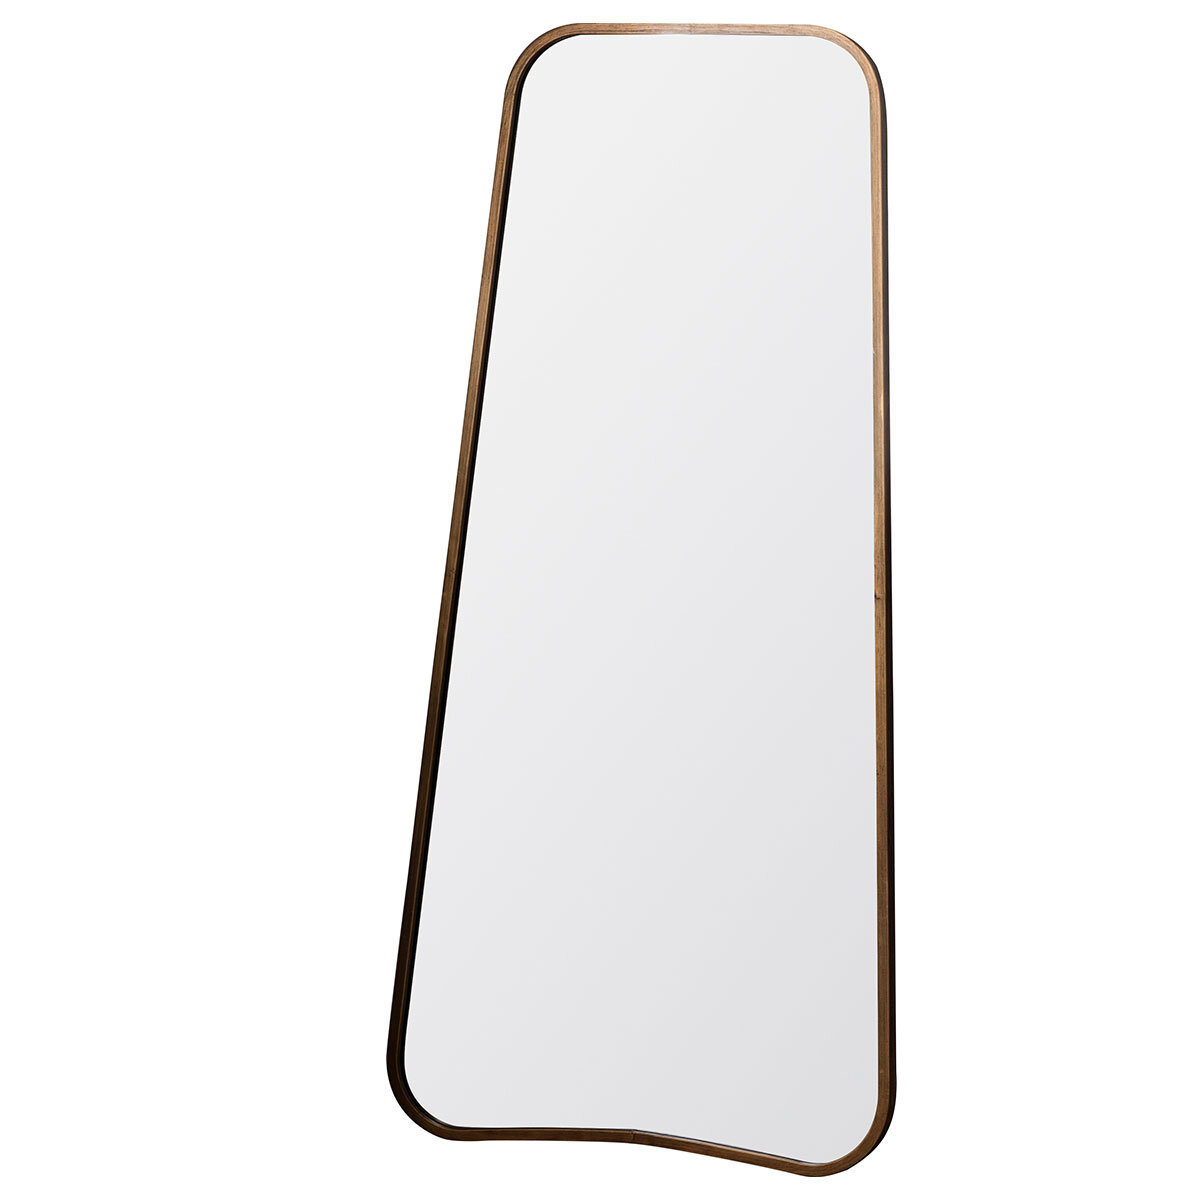 Gallery Bearsted Leaner mirror